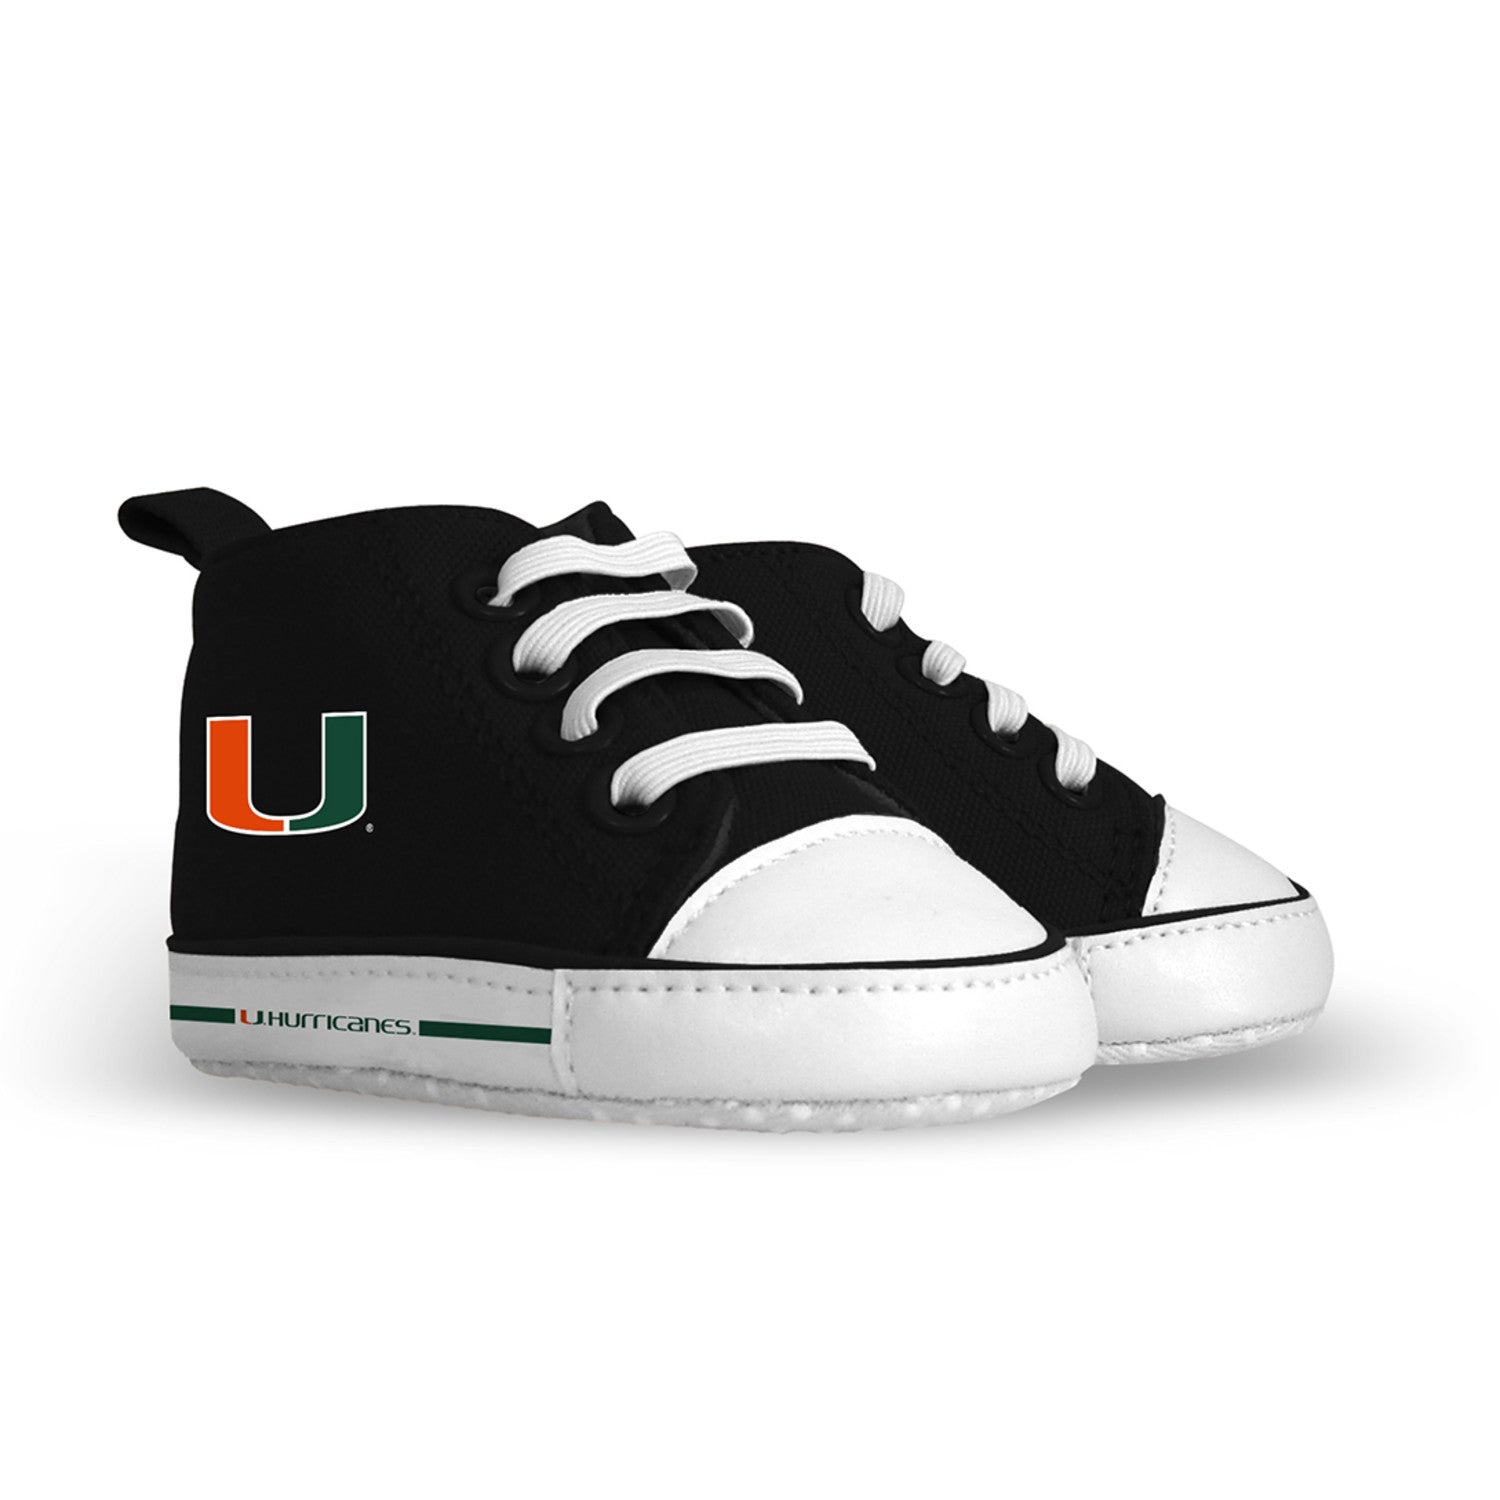 Miami Hurricanes Baby Shoes